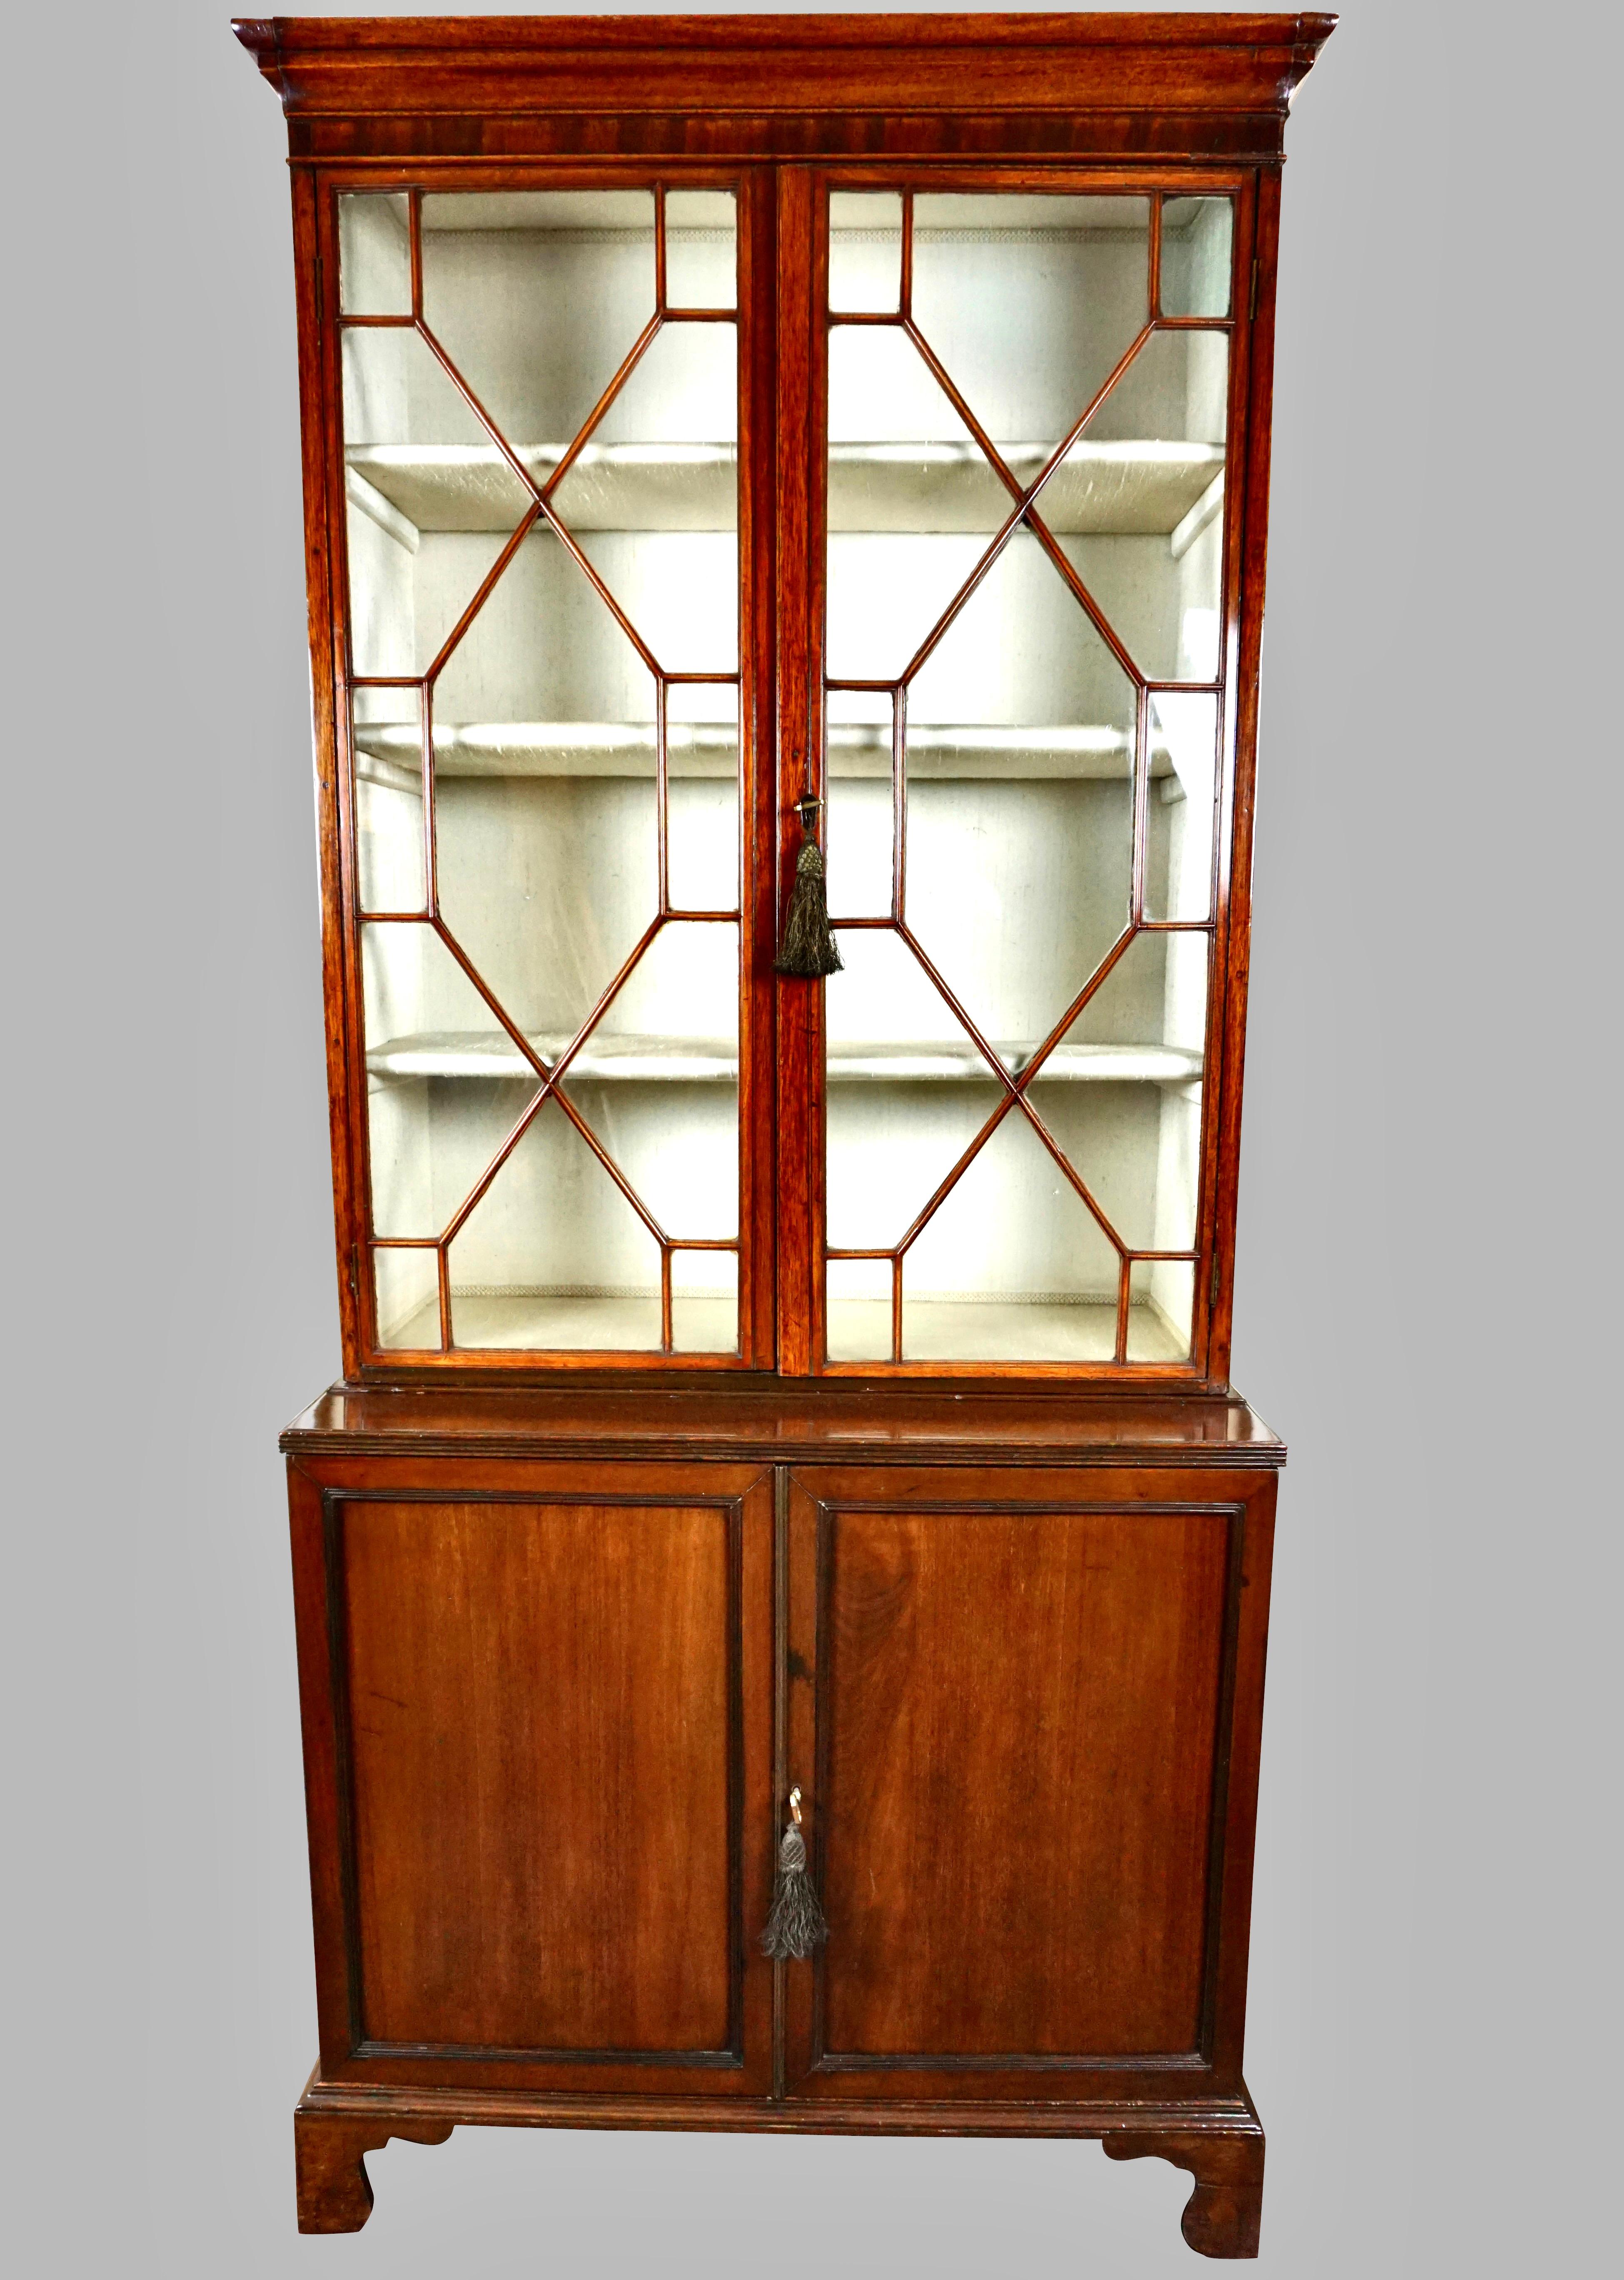 English Georgian Period Mahogany Bookcase Cabinet with Astragal Glazed Doors 1